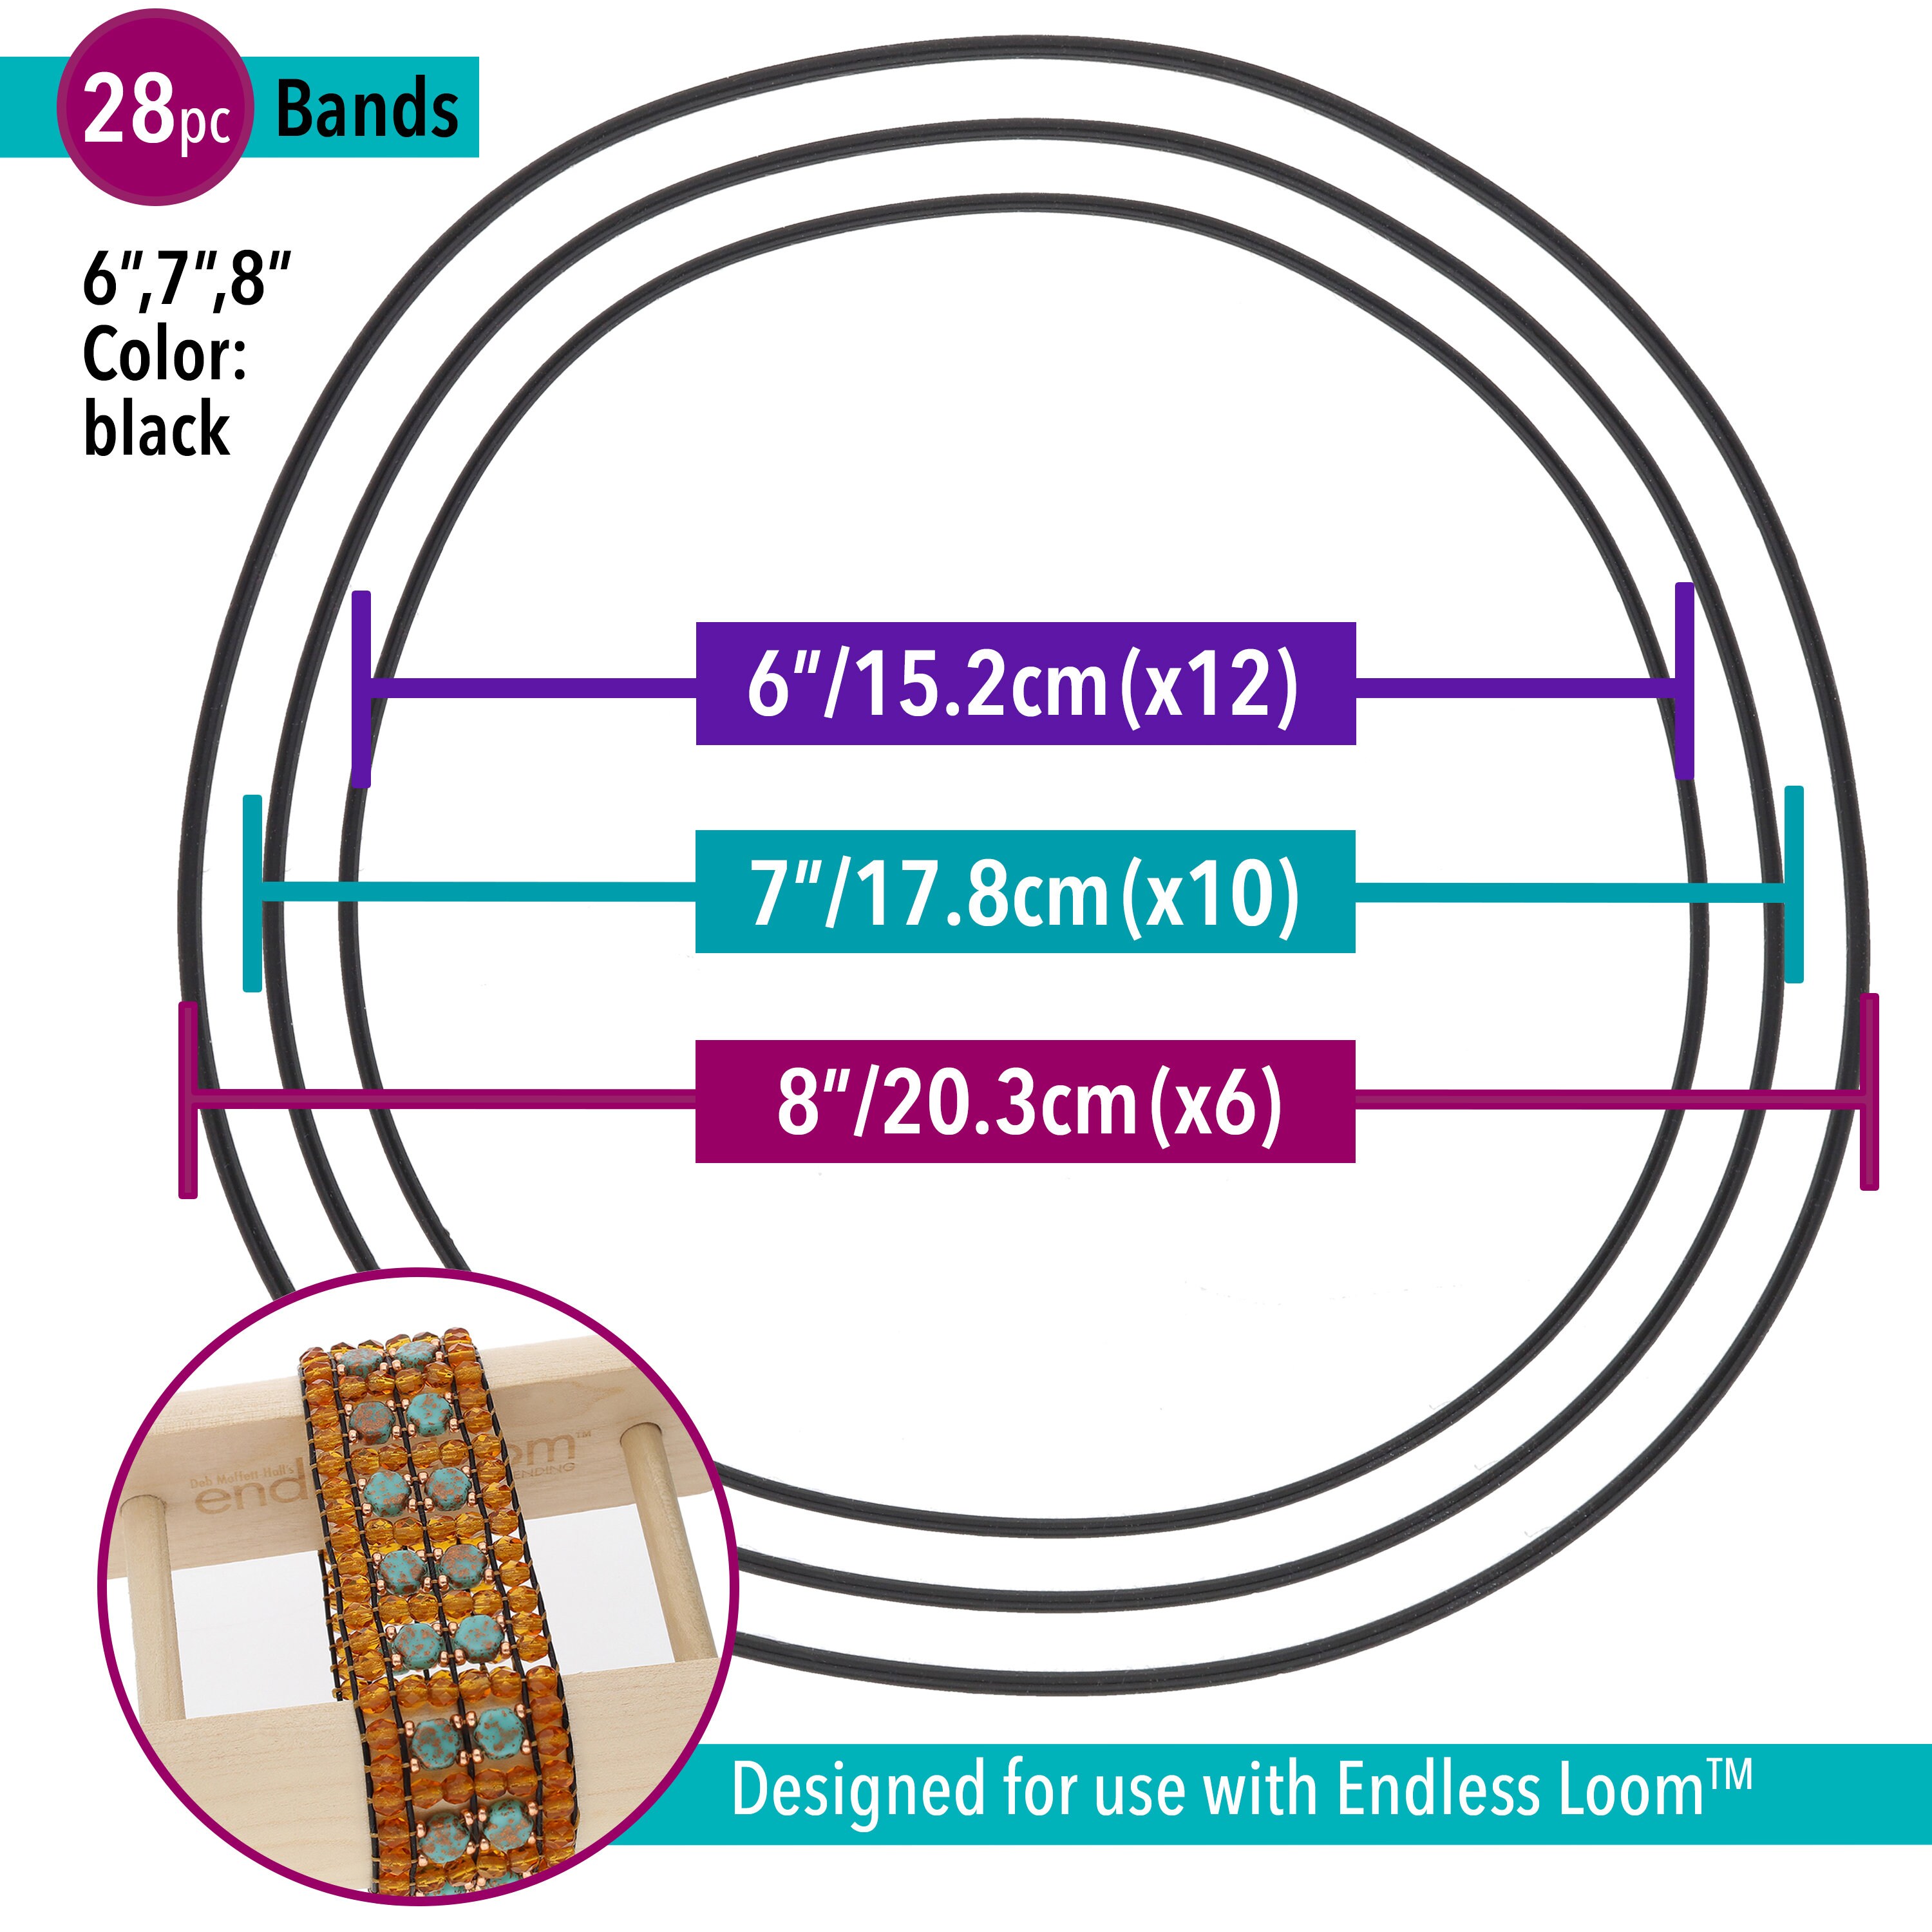 ENDLESS LOOM™, Beading Loom, Wrap bracelet, Portable Travel Size